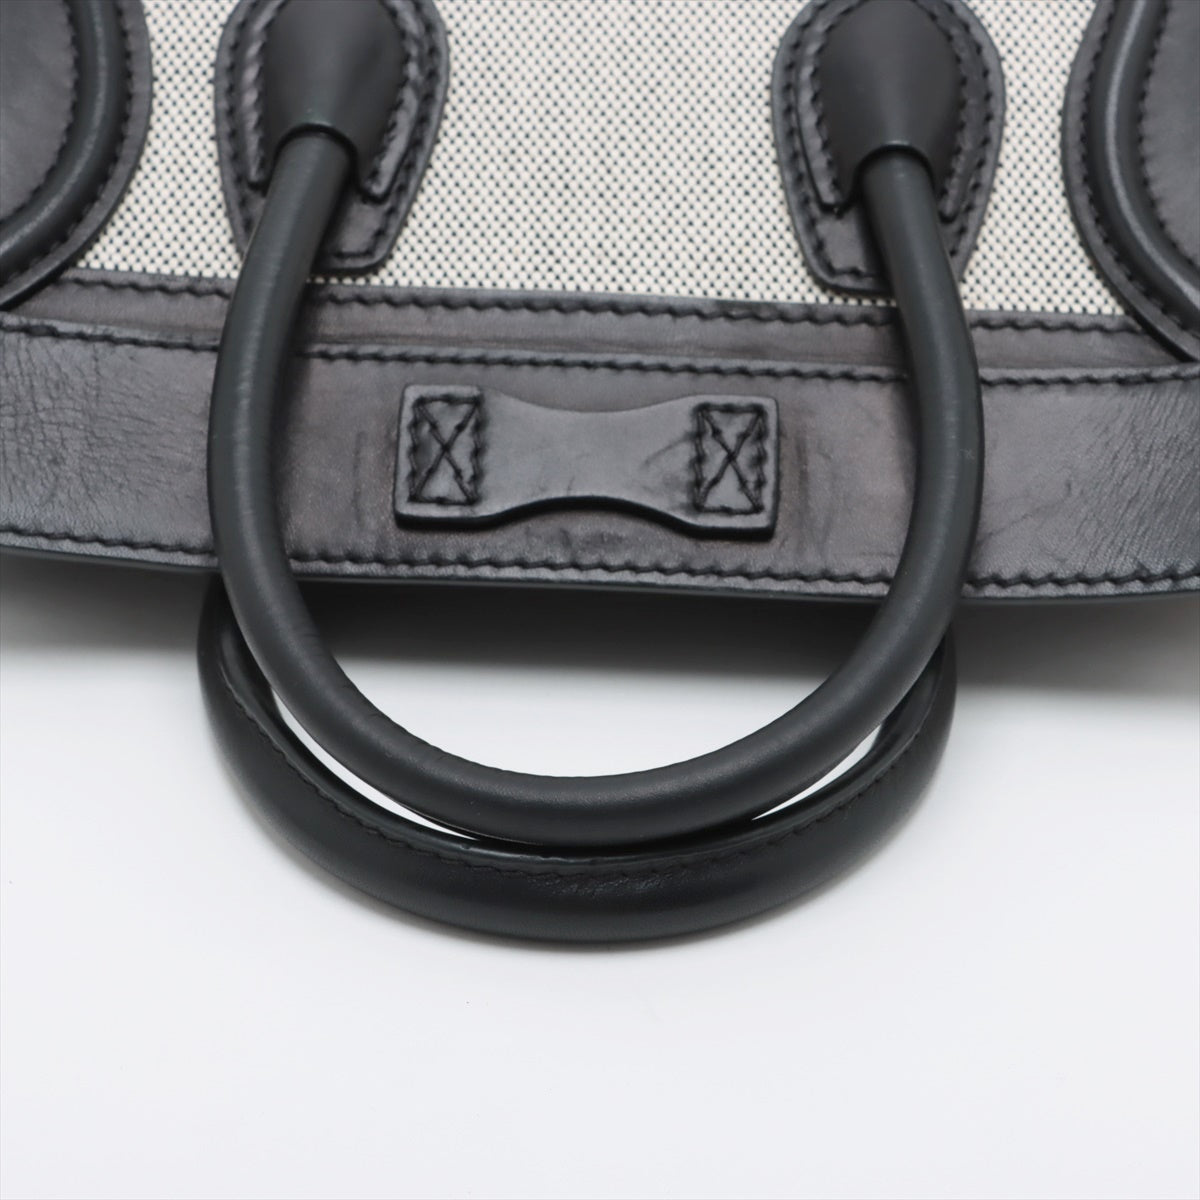 CELINE Luggage Nano shopper Leather 2way handbag black x beige